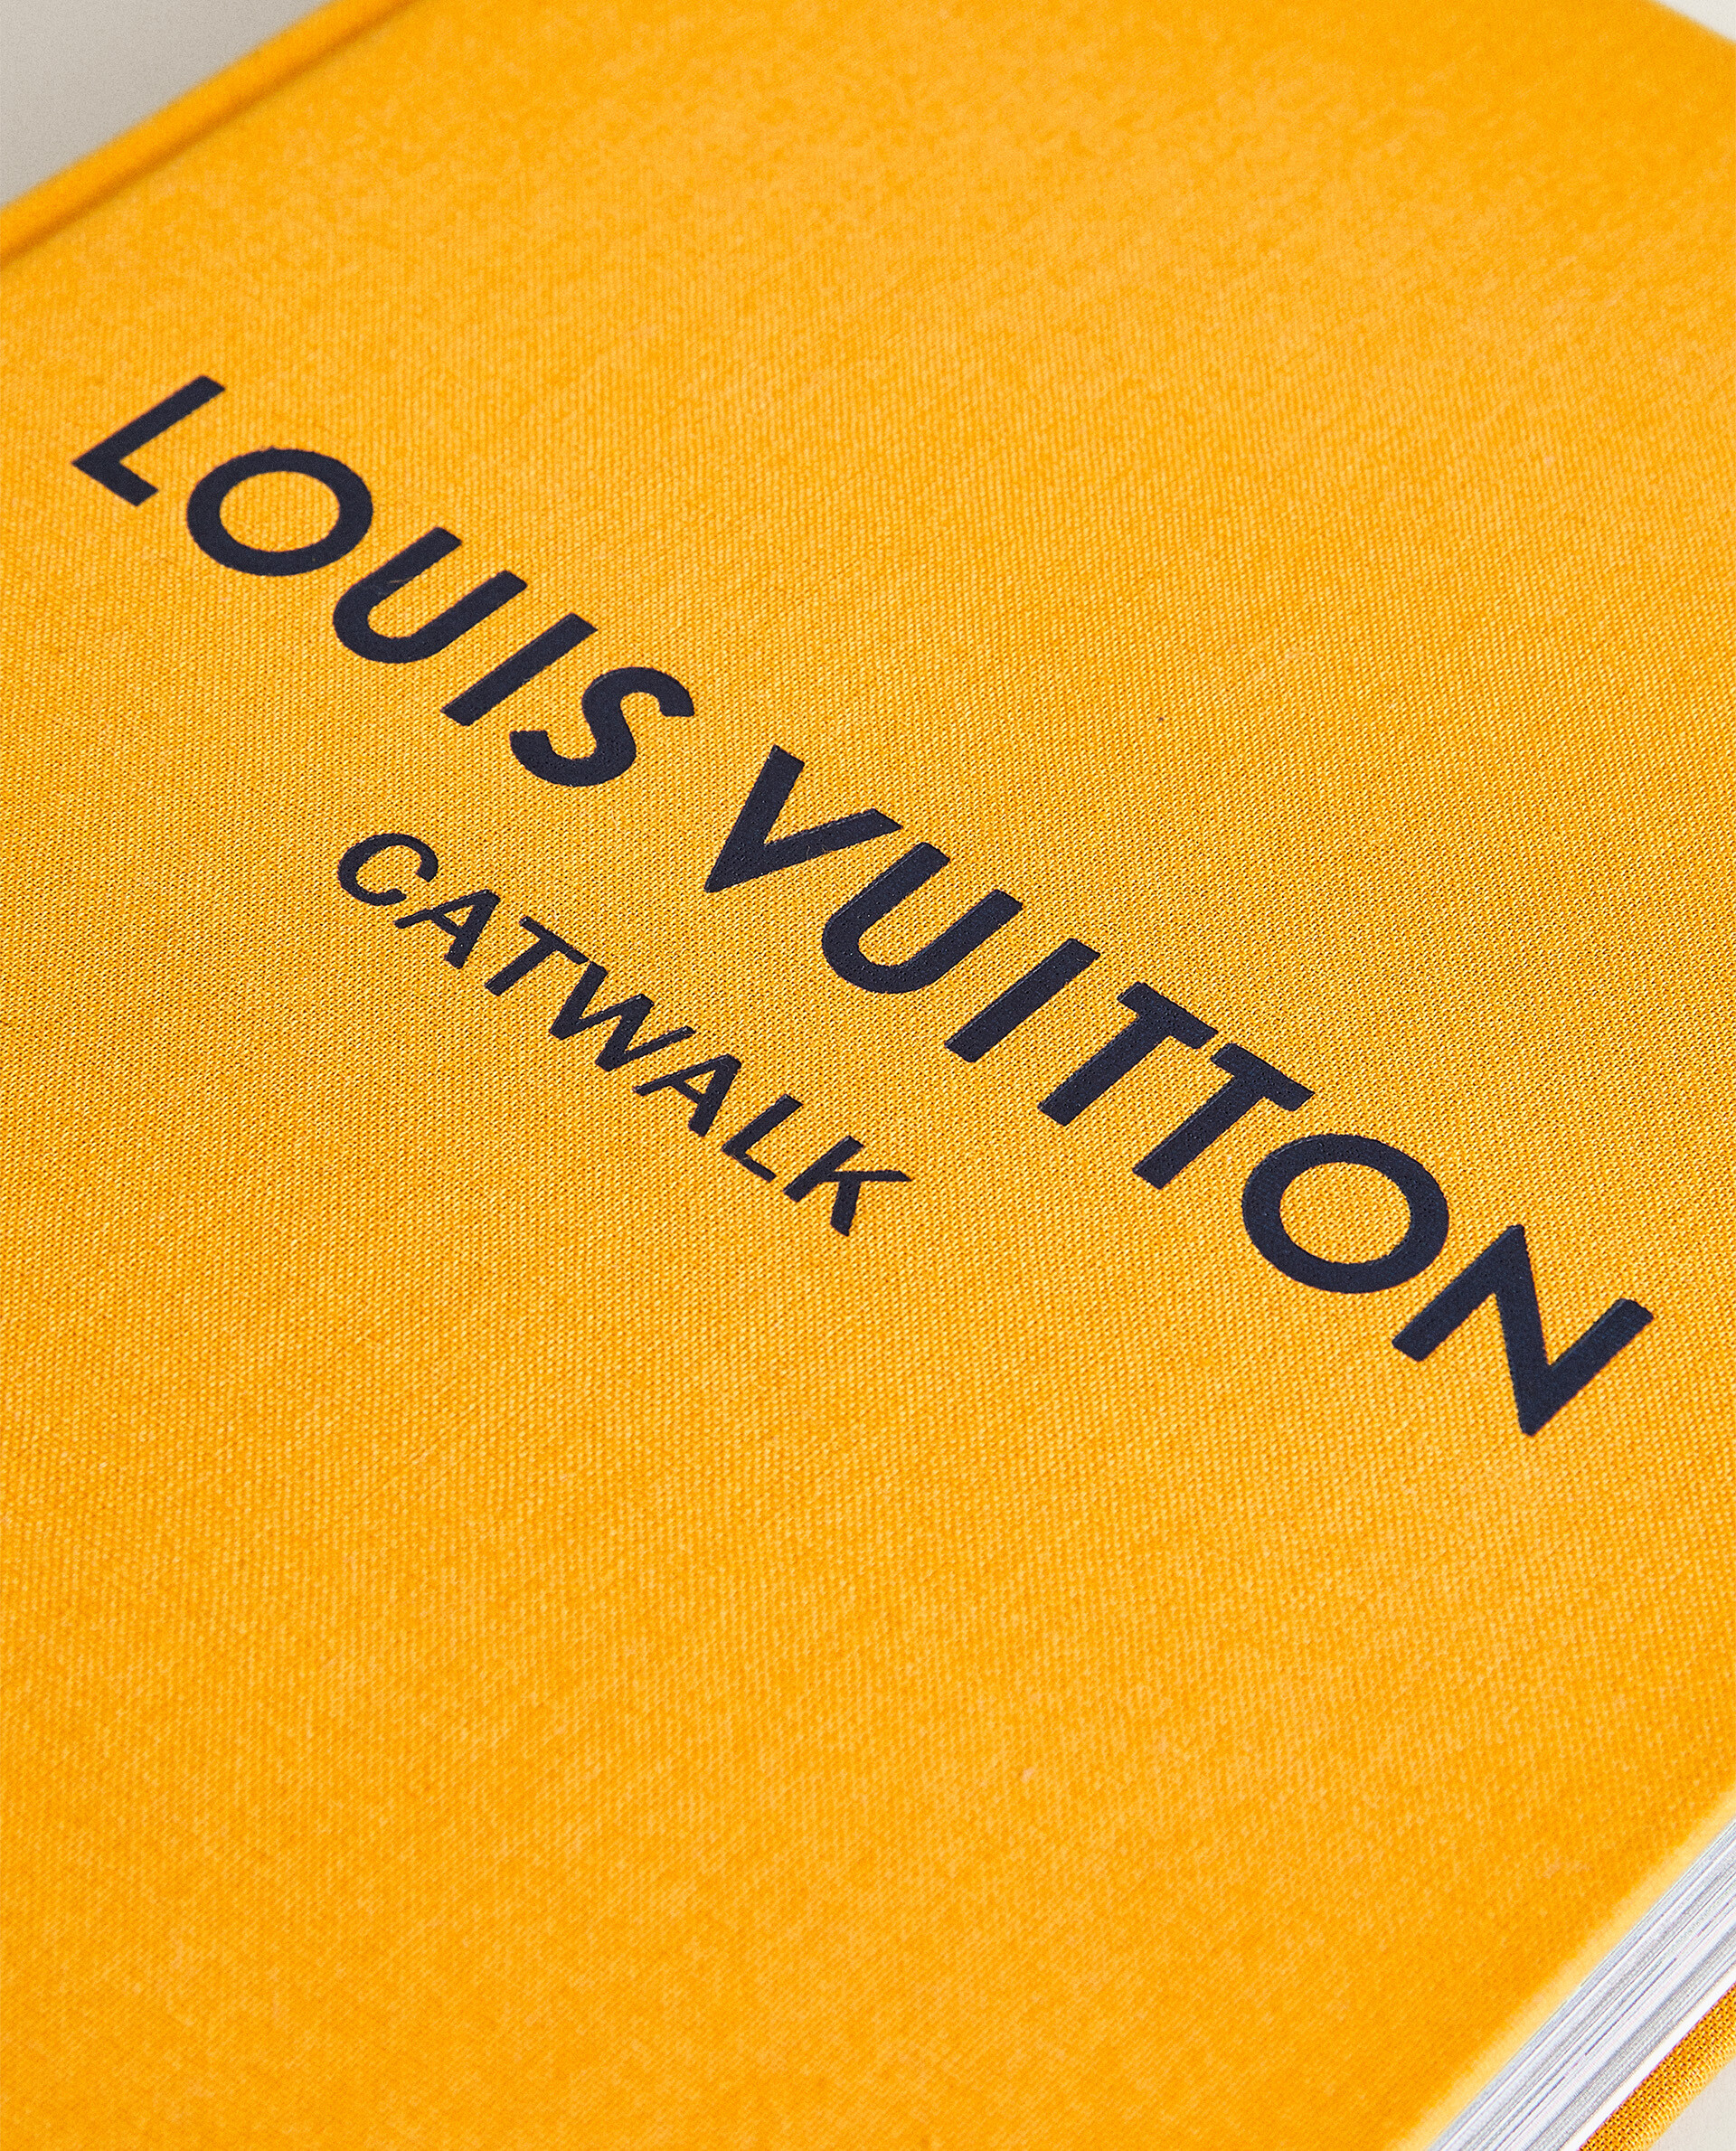 Louis Vuitton Catwalk boek